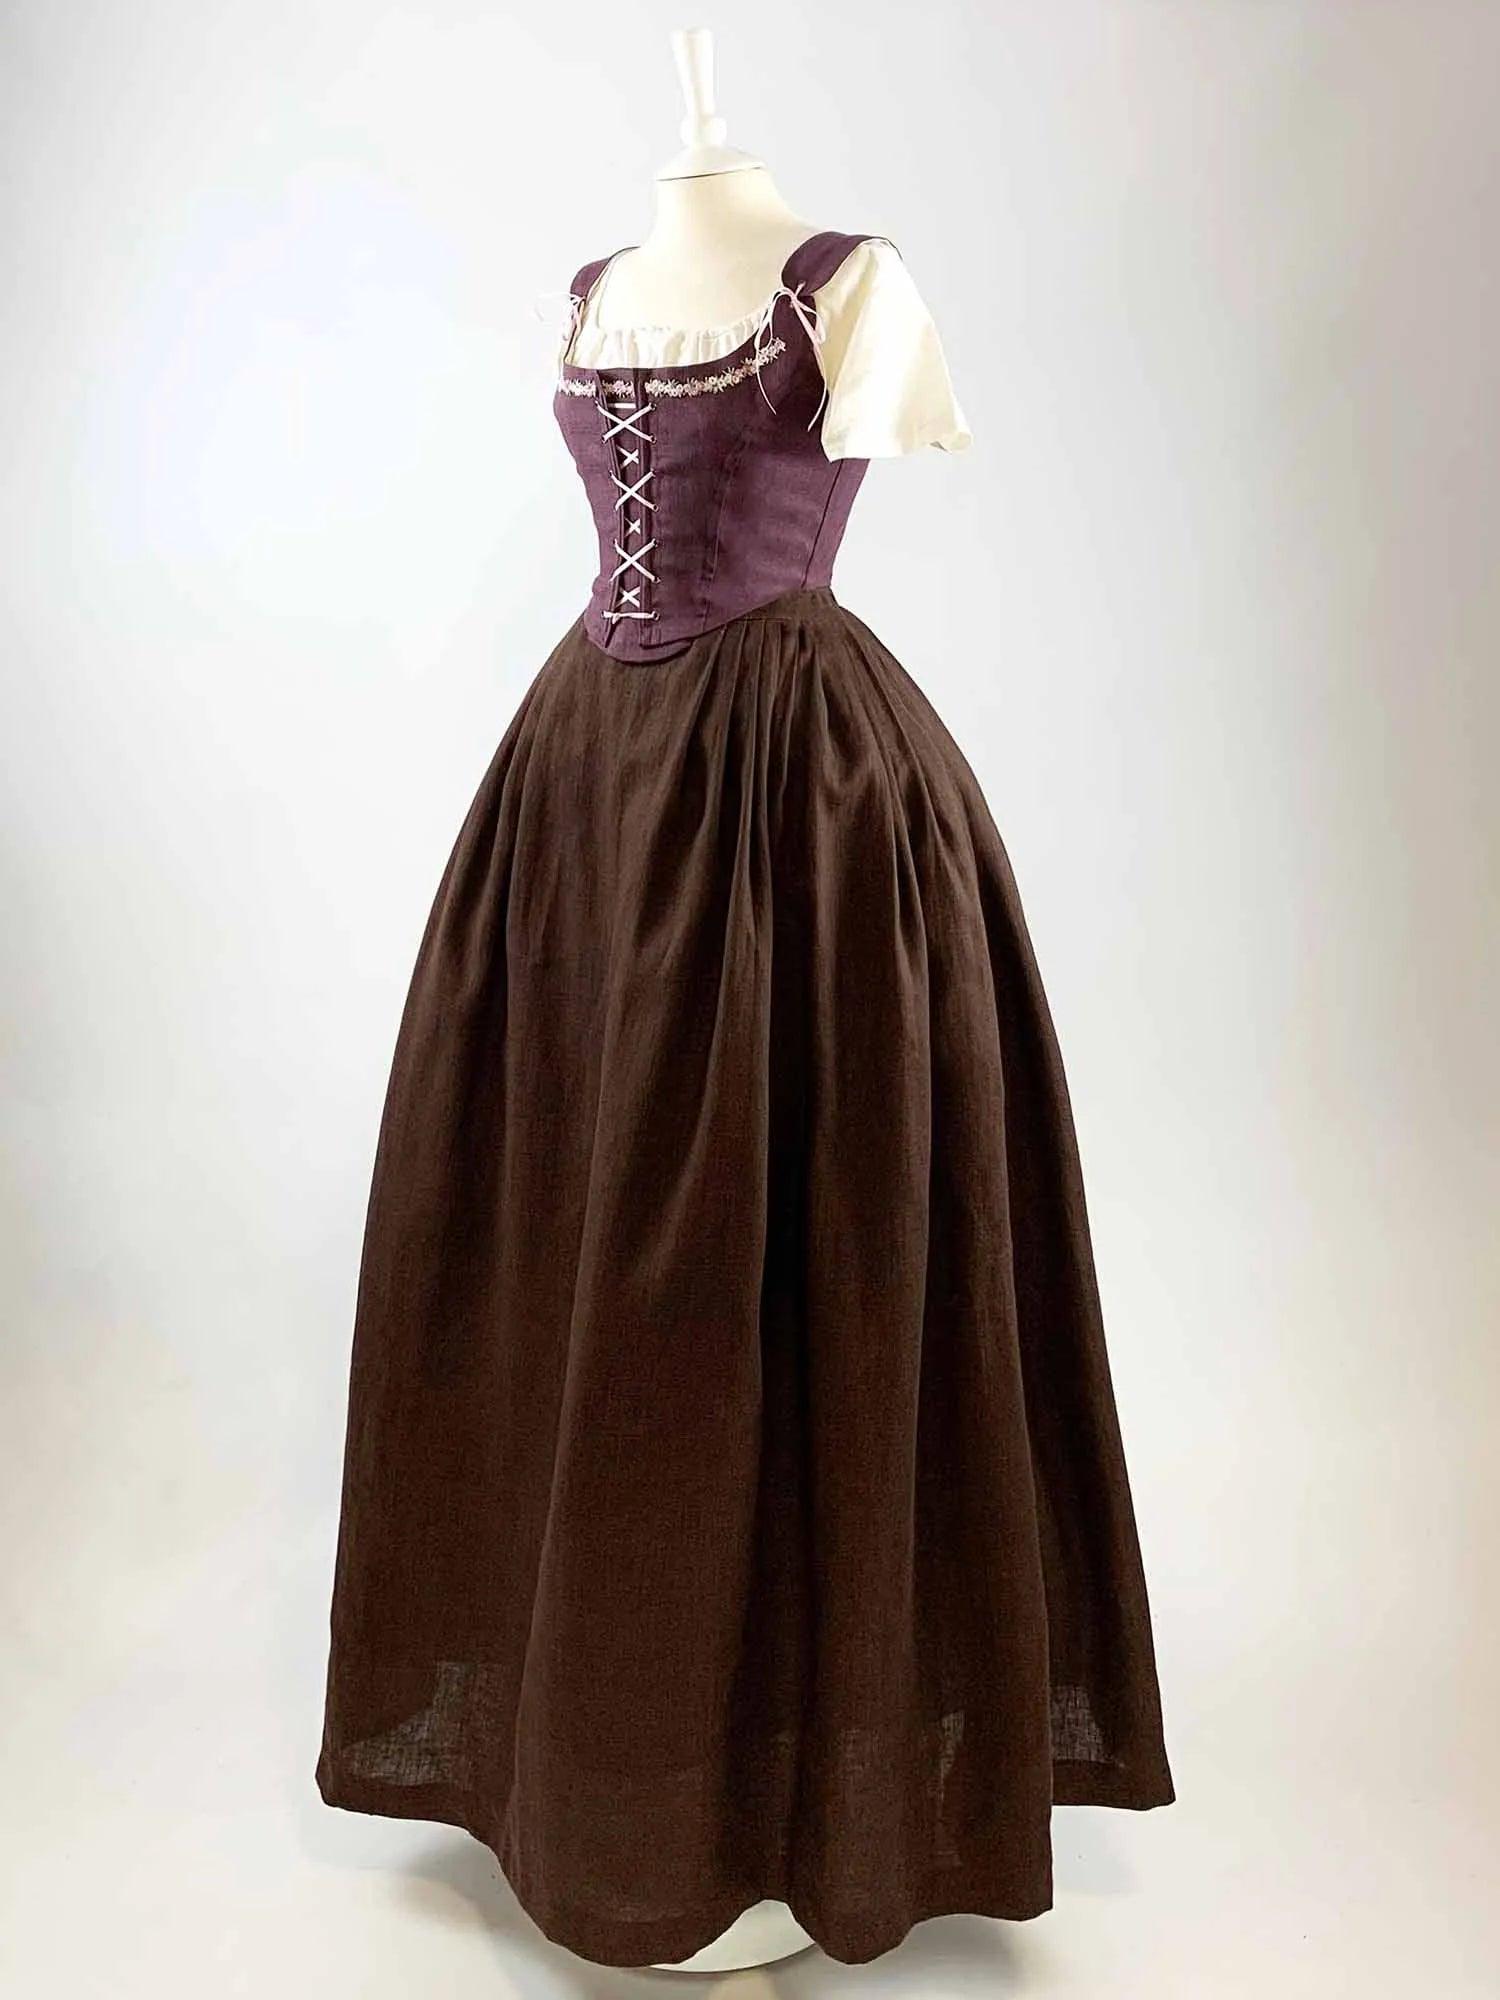 ISOLDE, Renaissance Costume in Purple & Chocolate Linen - Atelier Serraspina - Costume Renaissance en Lin Violet et Chocolat